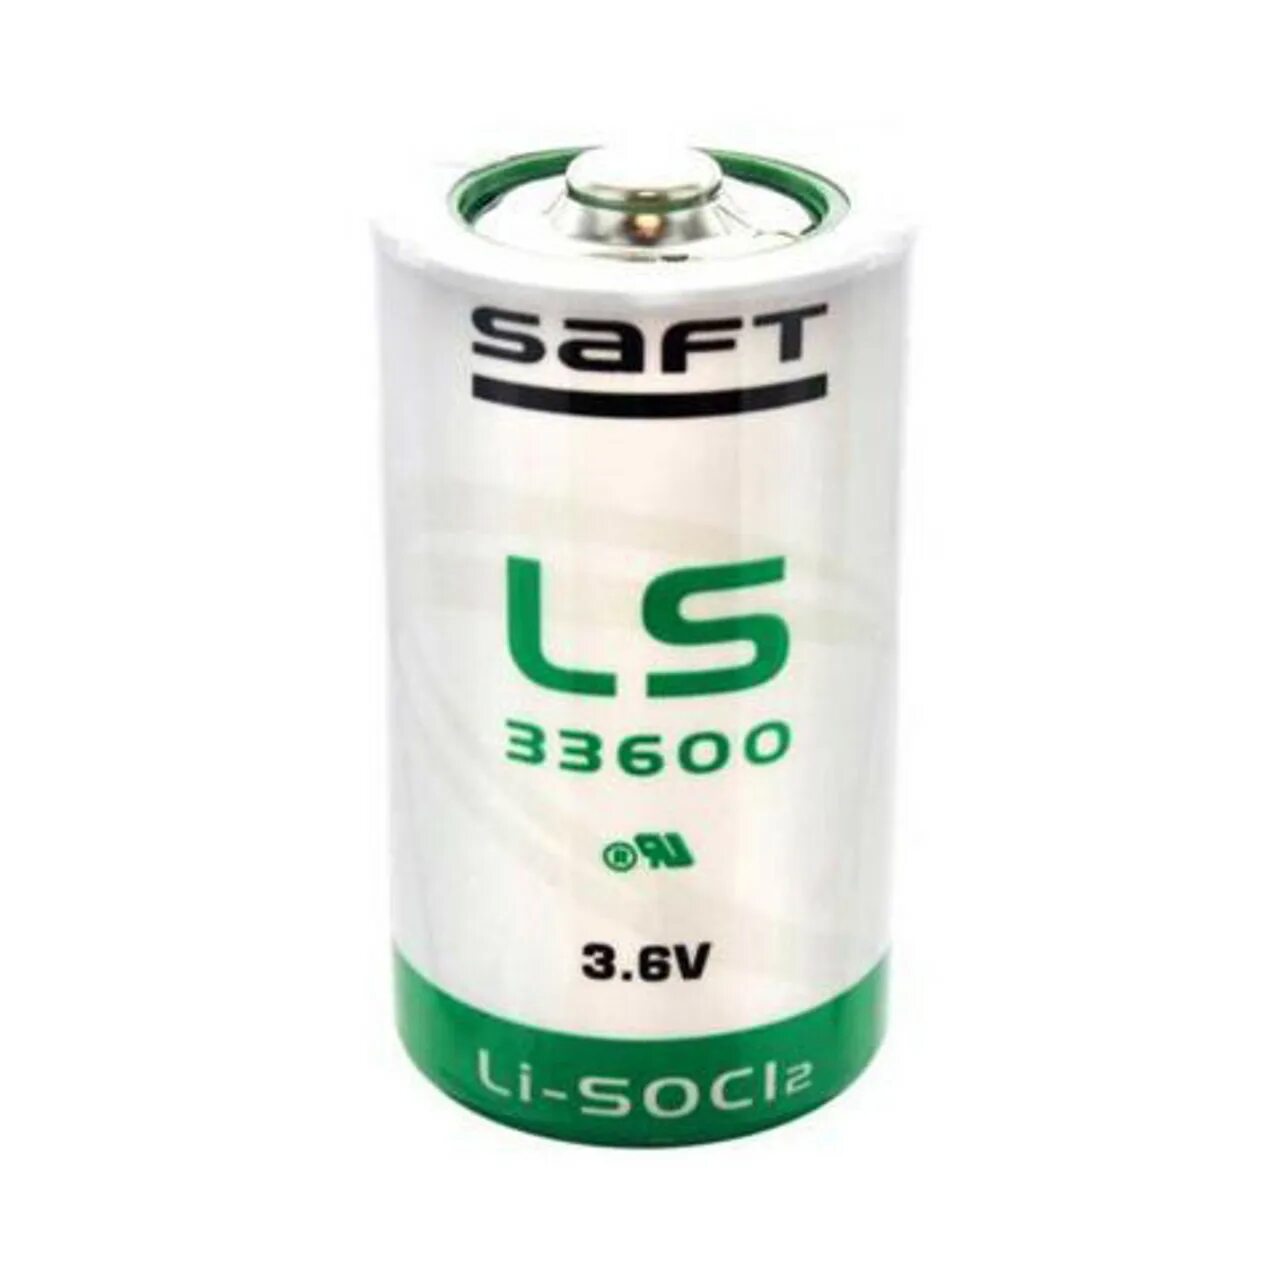 Купить батарейку 3.6. Батарейка Saft LS 33600 D. Аккумулятор LS 33600 3.6 V. Батарейка 3.6 вольт. Элемент питания 3,6v (er26500/t)(Minamoto).